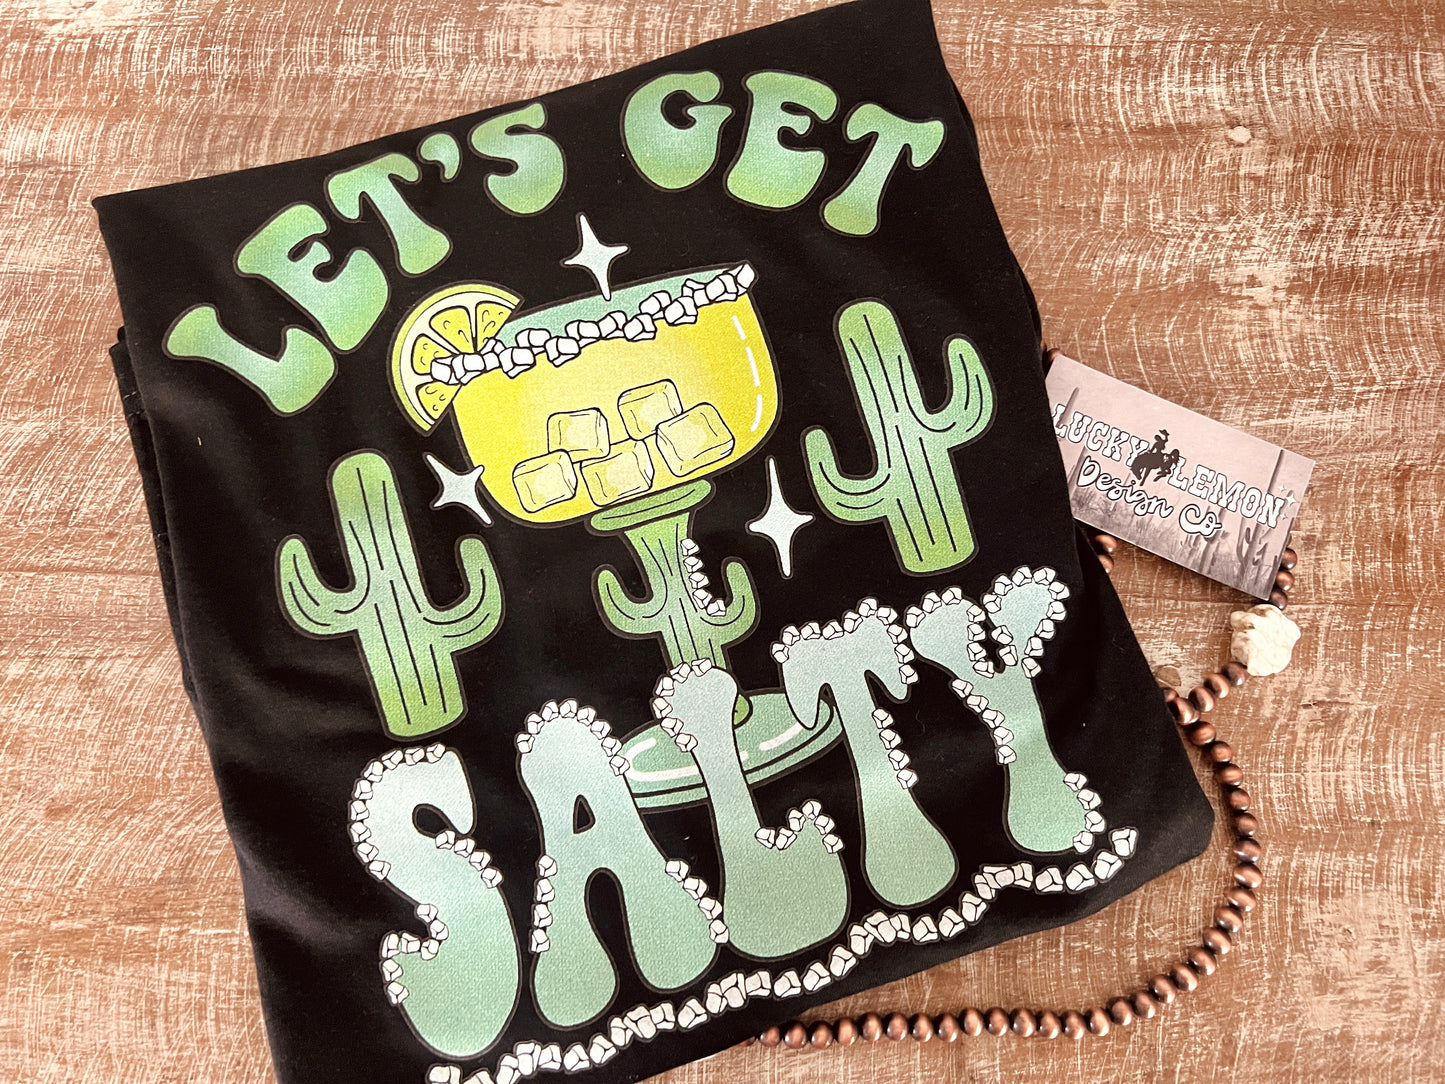 Let’s get salty